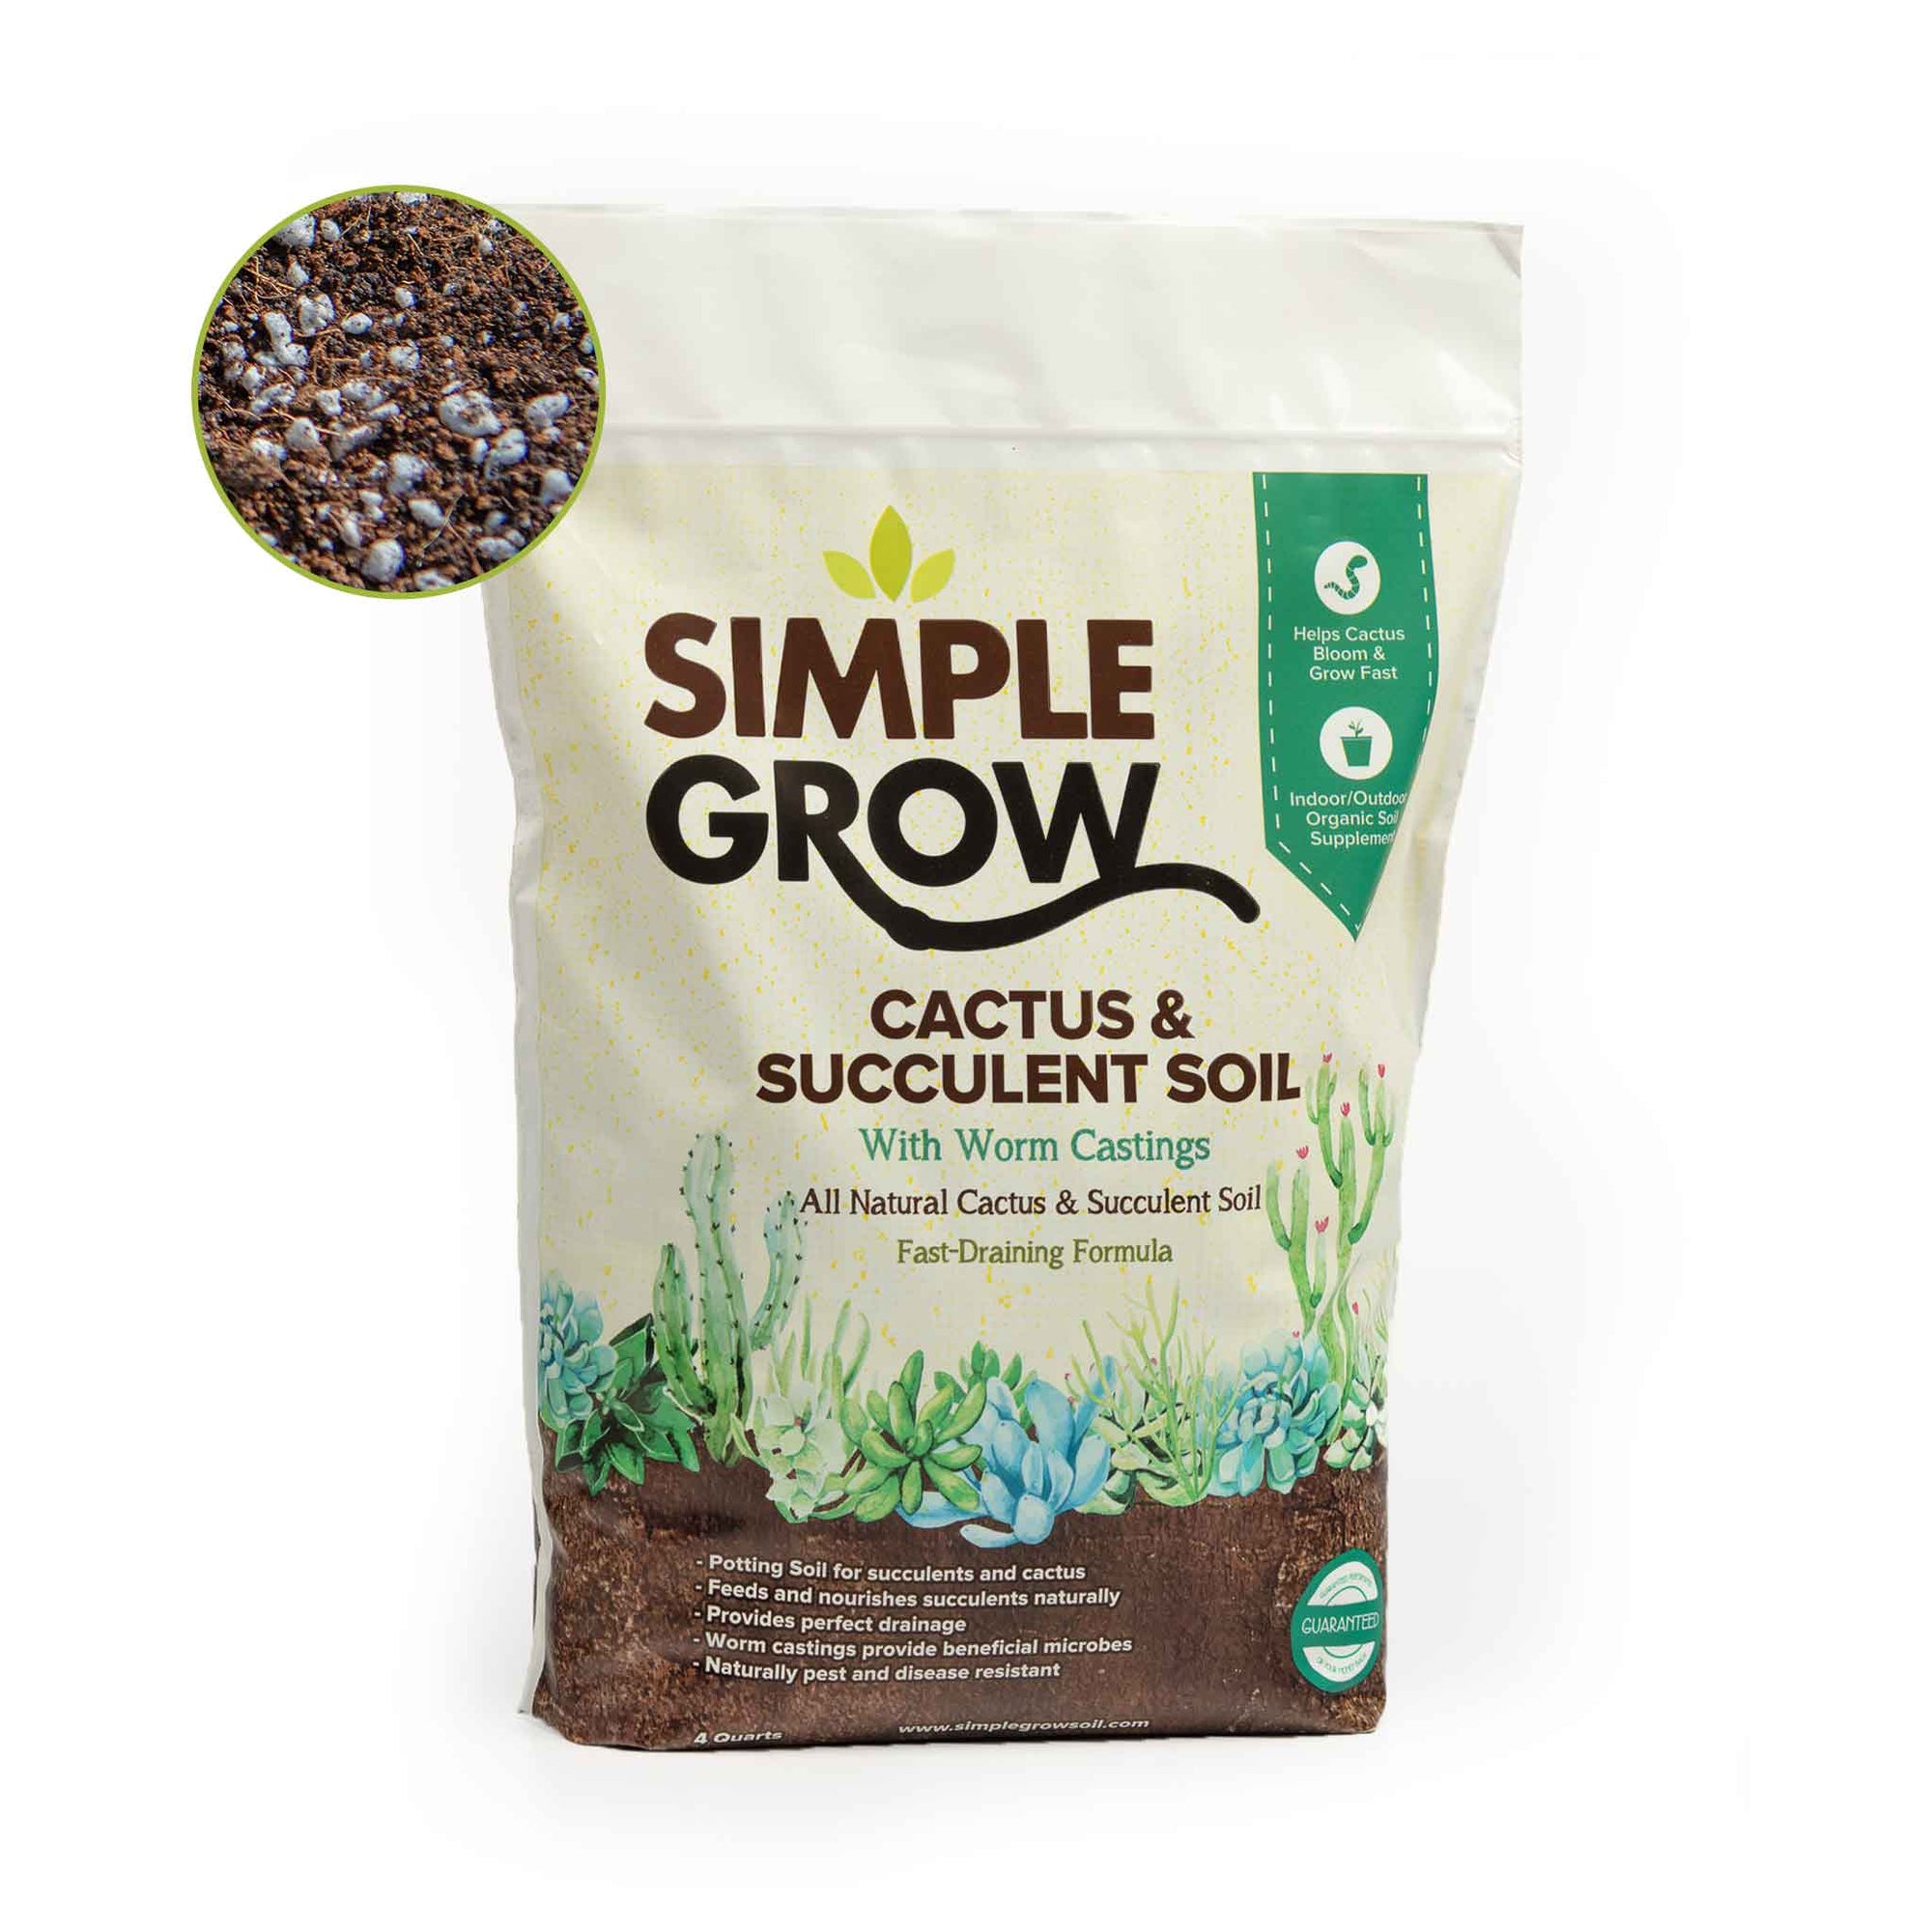 Simple Grow Cactus & Succulent Soil - simplegrowsoil